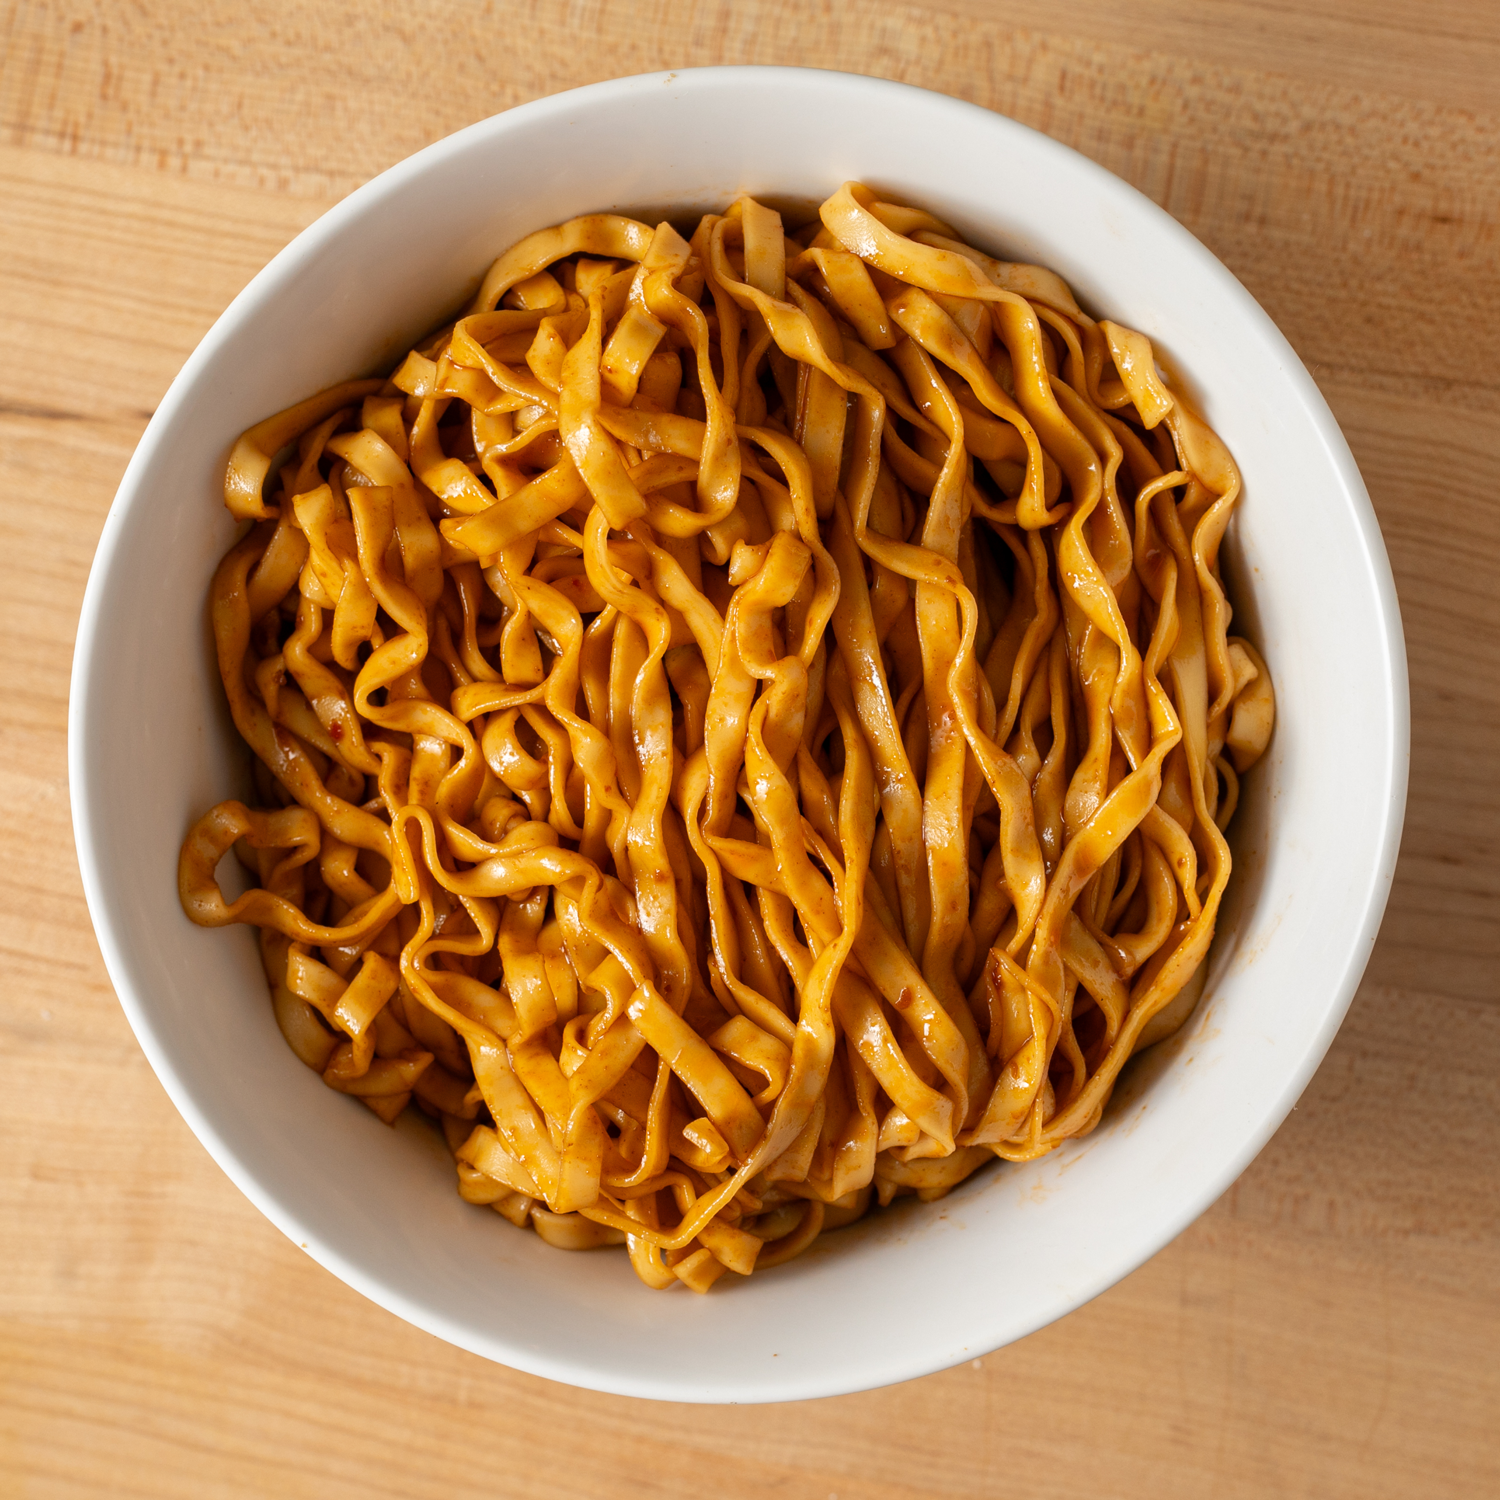 Spicy Chili Noodles  5 Packs – Momofuku Goods